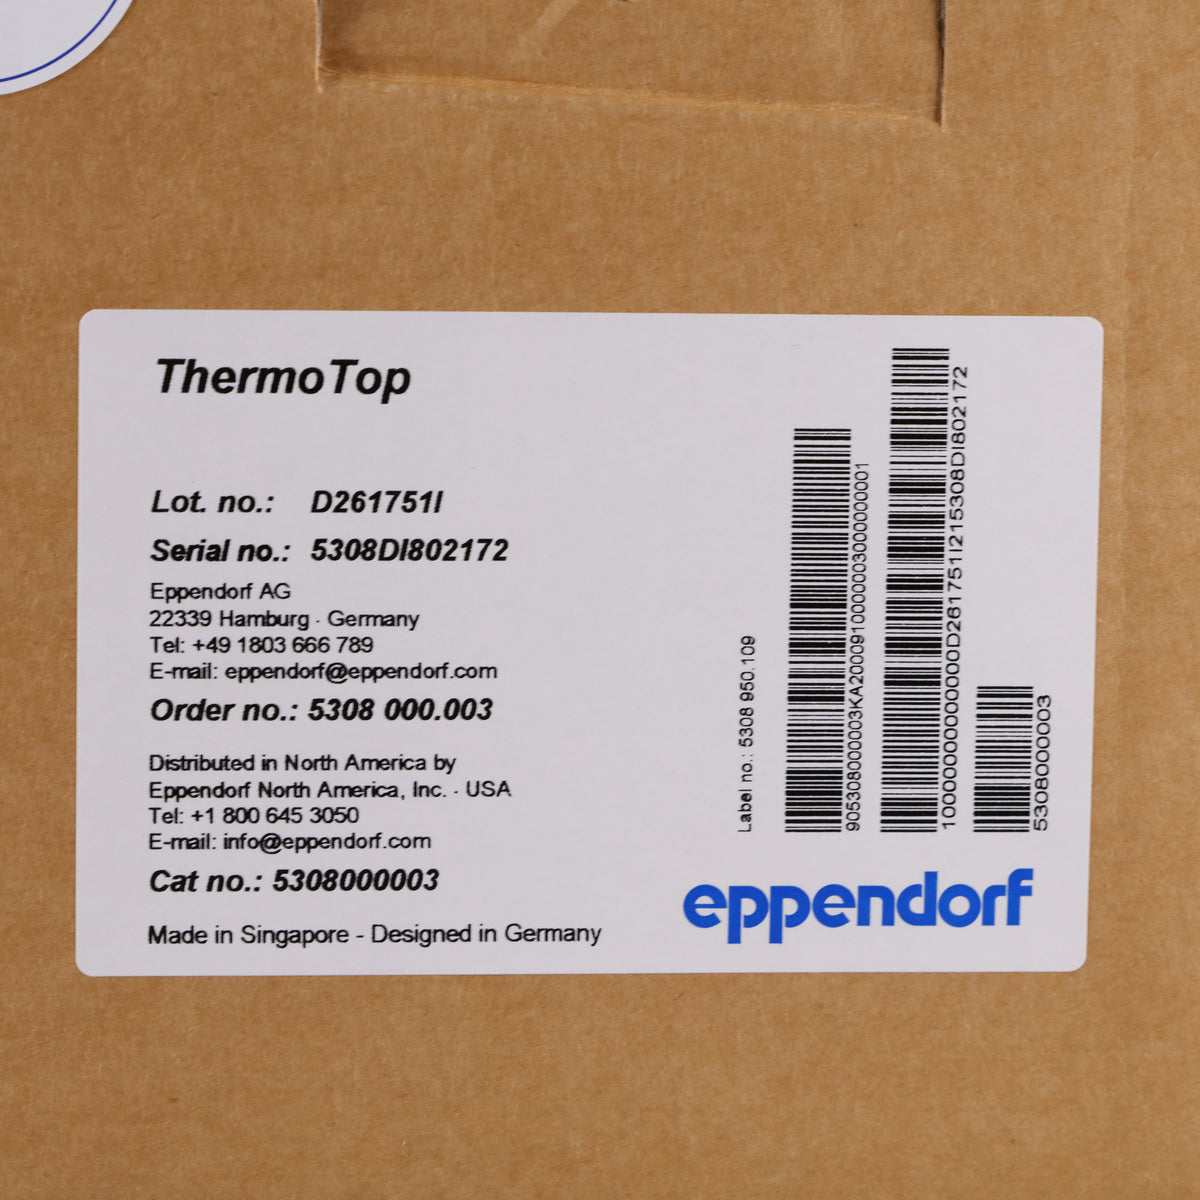 Eppendorf ThermoTop #5308000003 – reLAB